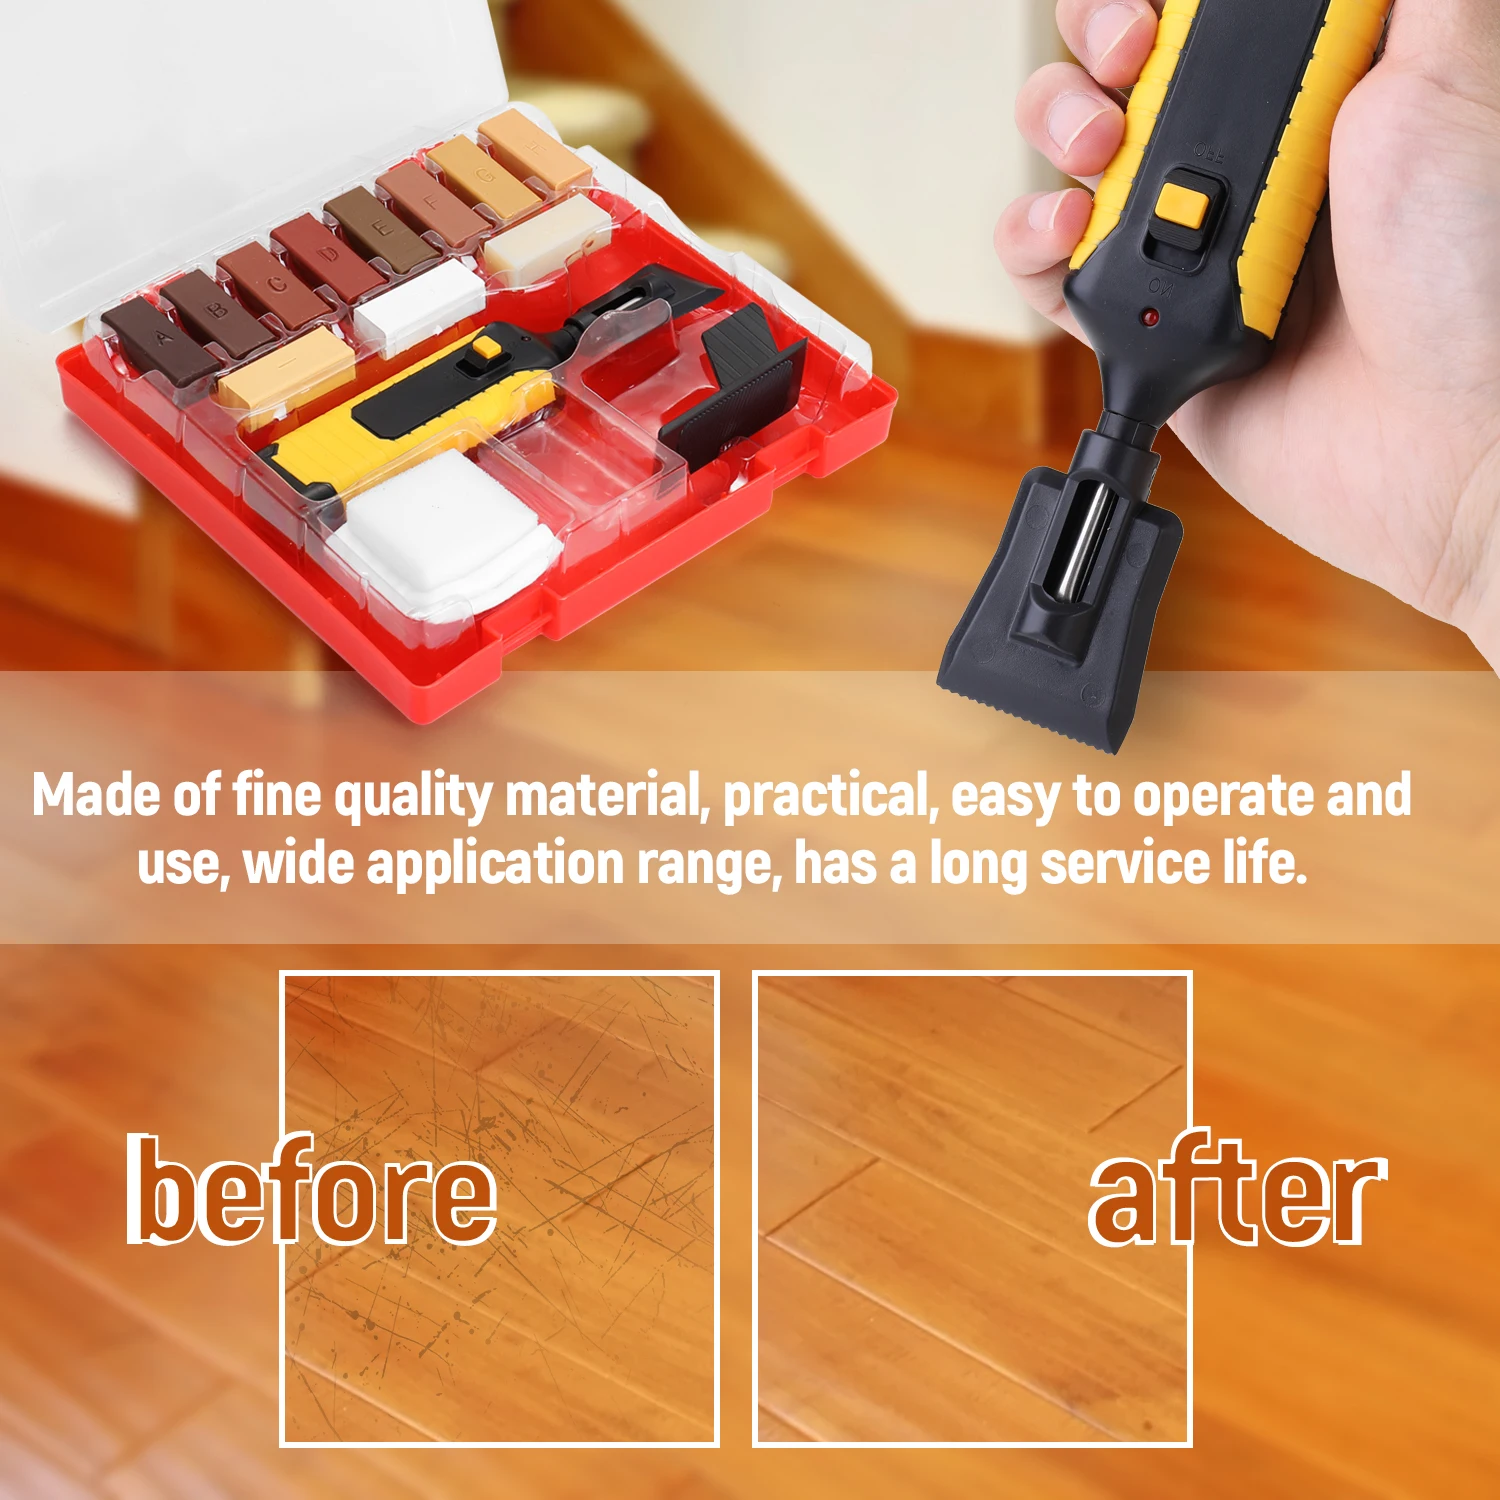 

Meterk Laminate Repairing Kit Woodworking Tools Wax System Floor Worktop Sturdy Casing Chips Scratches Mending Tool Hand Tools